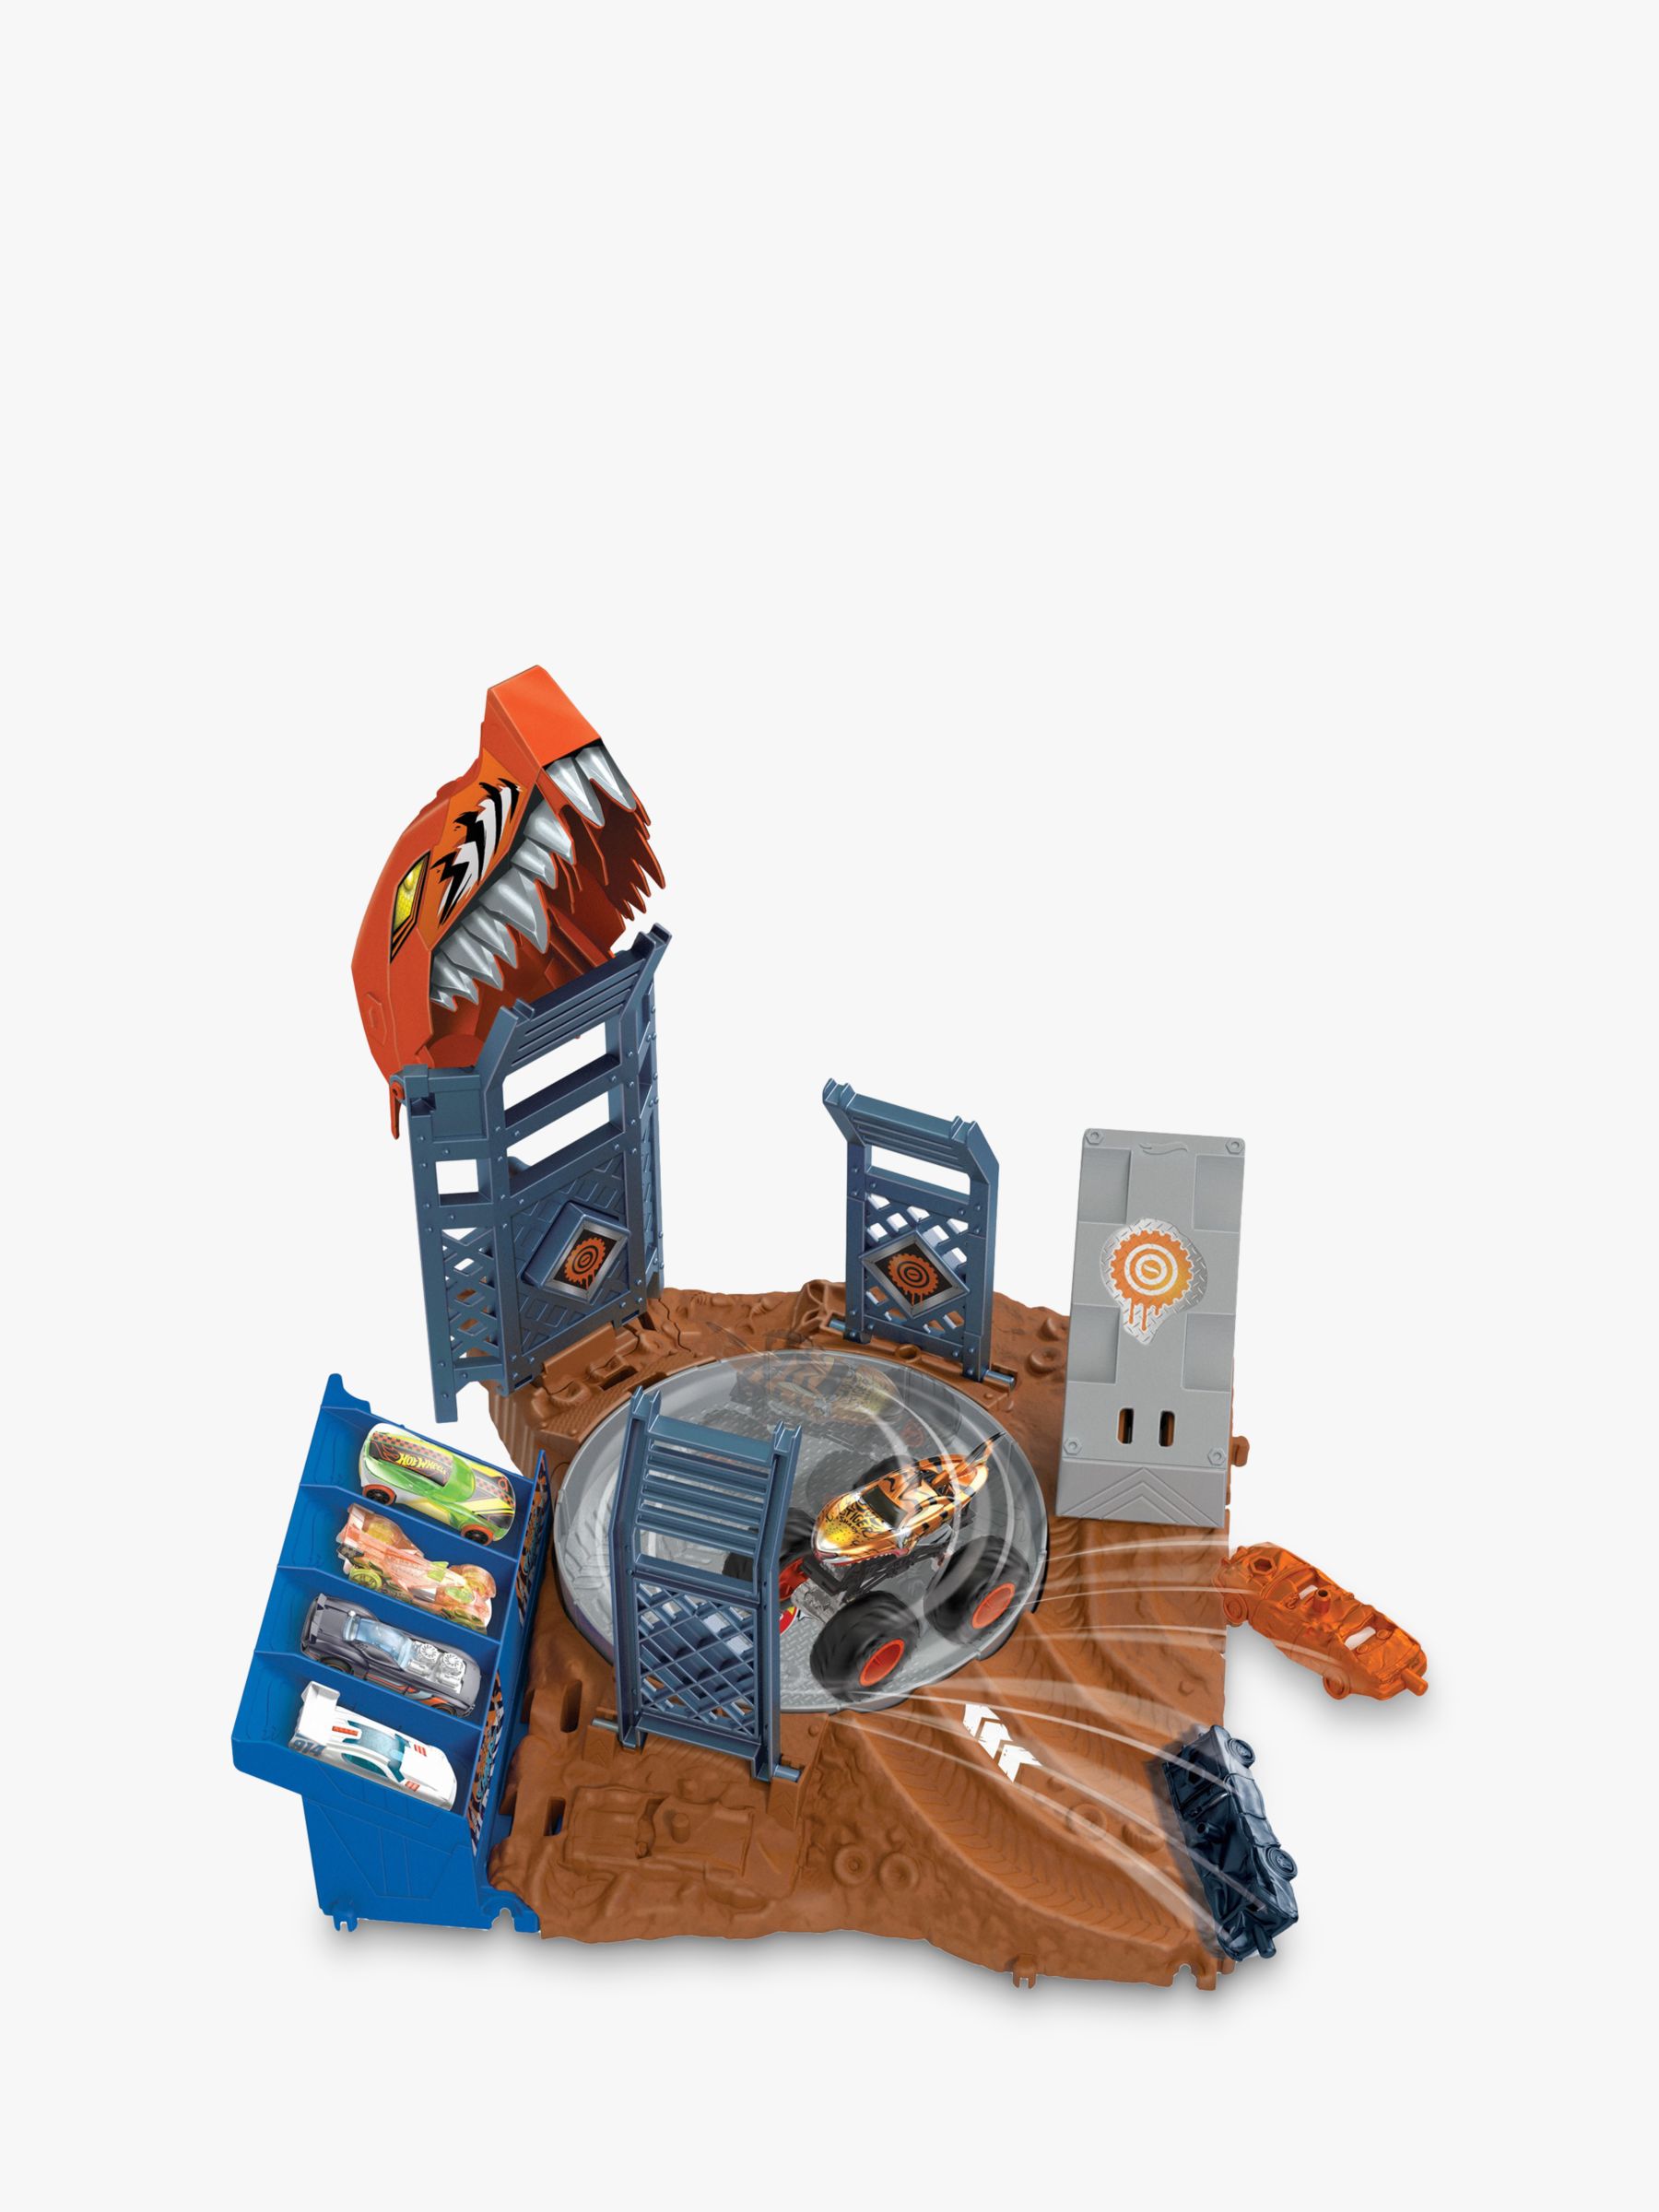 Mattel Hot Wheels Monster Trucks Arena Smashers - Free Shipping